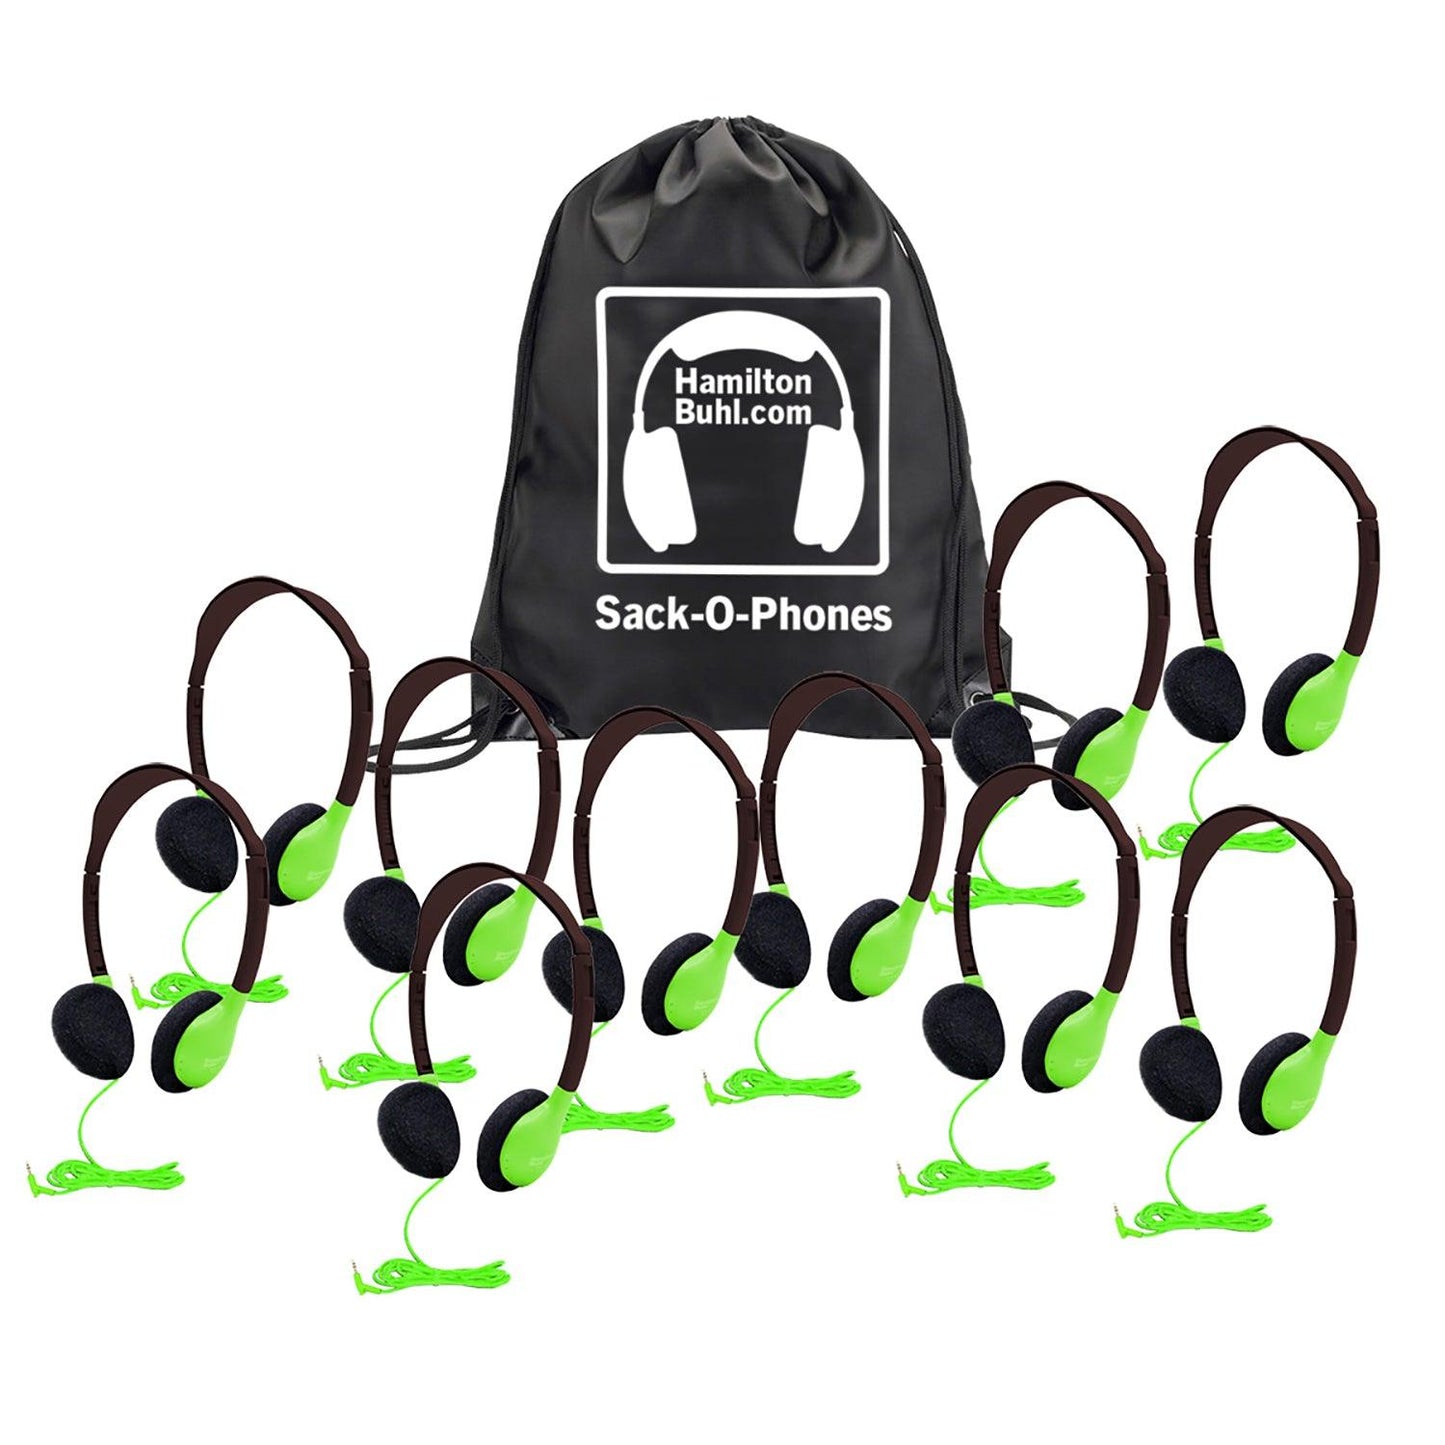 Sack-O-Phones, 10 Personal Headphones in a Carry Bag, Green - Loomini